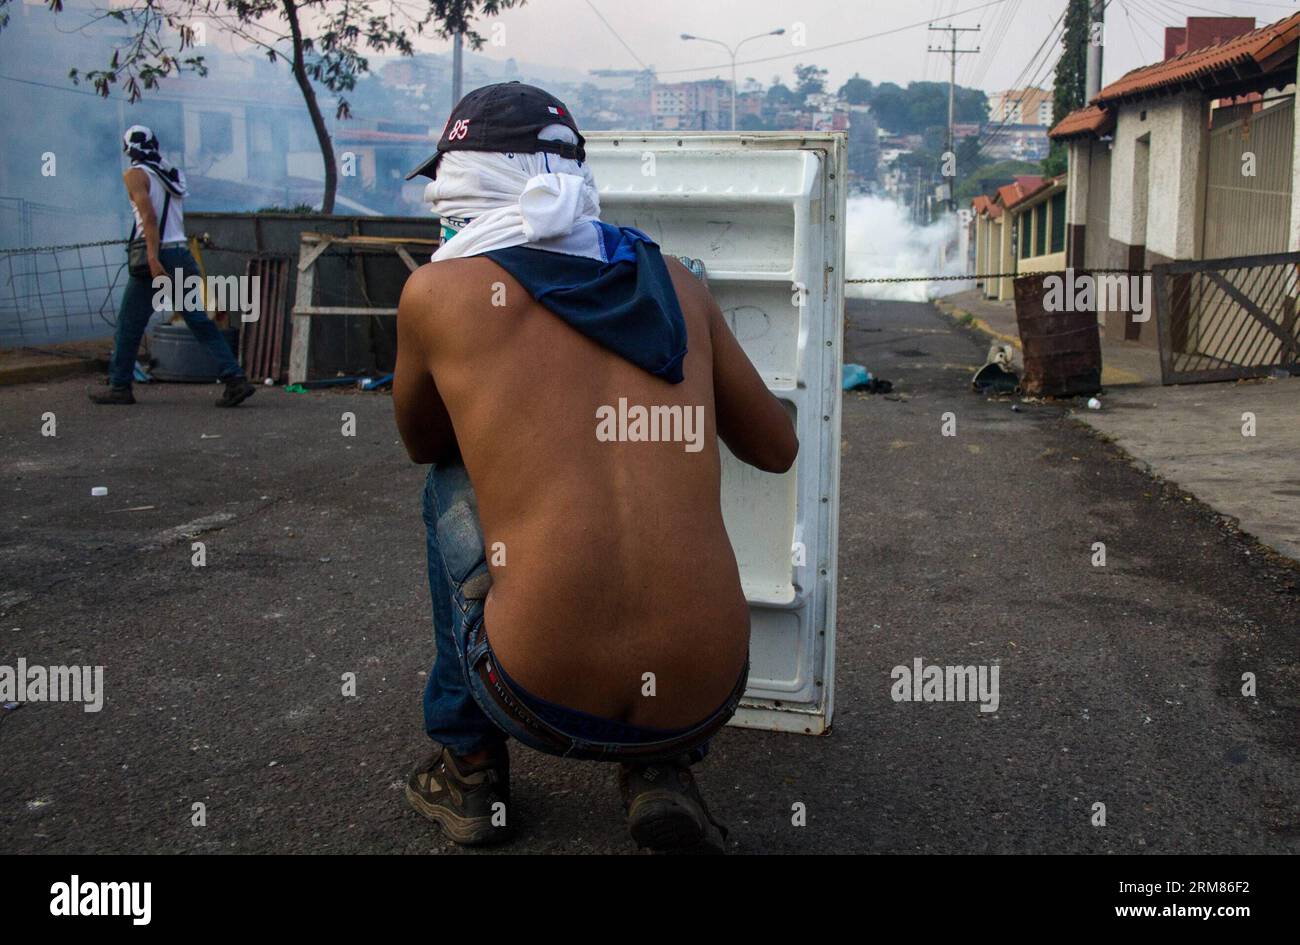 TACHIRA, March 30, 2014 - Demonstrators clash with elements of the Bolivarian National Guard during a protest in Tachira, Venezuela, on March 30, 2014. (Xinhua/Manuel Hernandez) (rt) (ah) VENEZUELA-TACHIRA-SOCIETY-PROTEST PUBLICATIONxNOTxINxCHN   Tachira March 30 2014 demonstrator Clash With Element of The Bolivarian National Guard during a Protest in Tachira Venezuela ON March 30 2014 XINHUA Manuel Hernandez RT AH Venezuela Tachira Society Protest PUBLICATIONxNOTxINxCHN Stock Photo